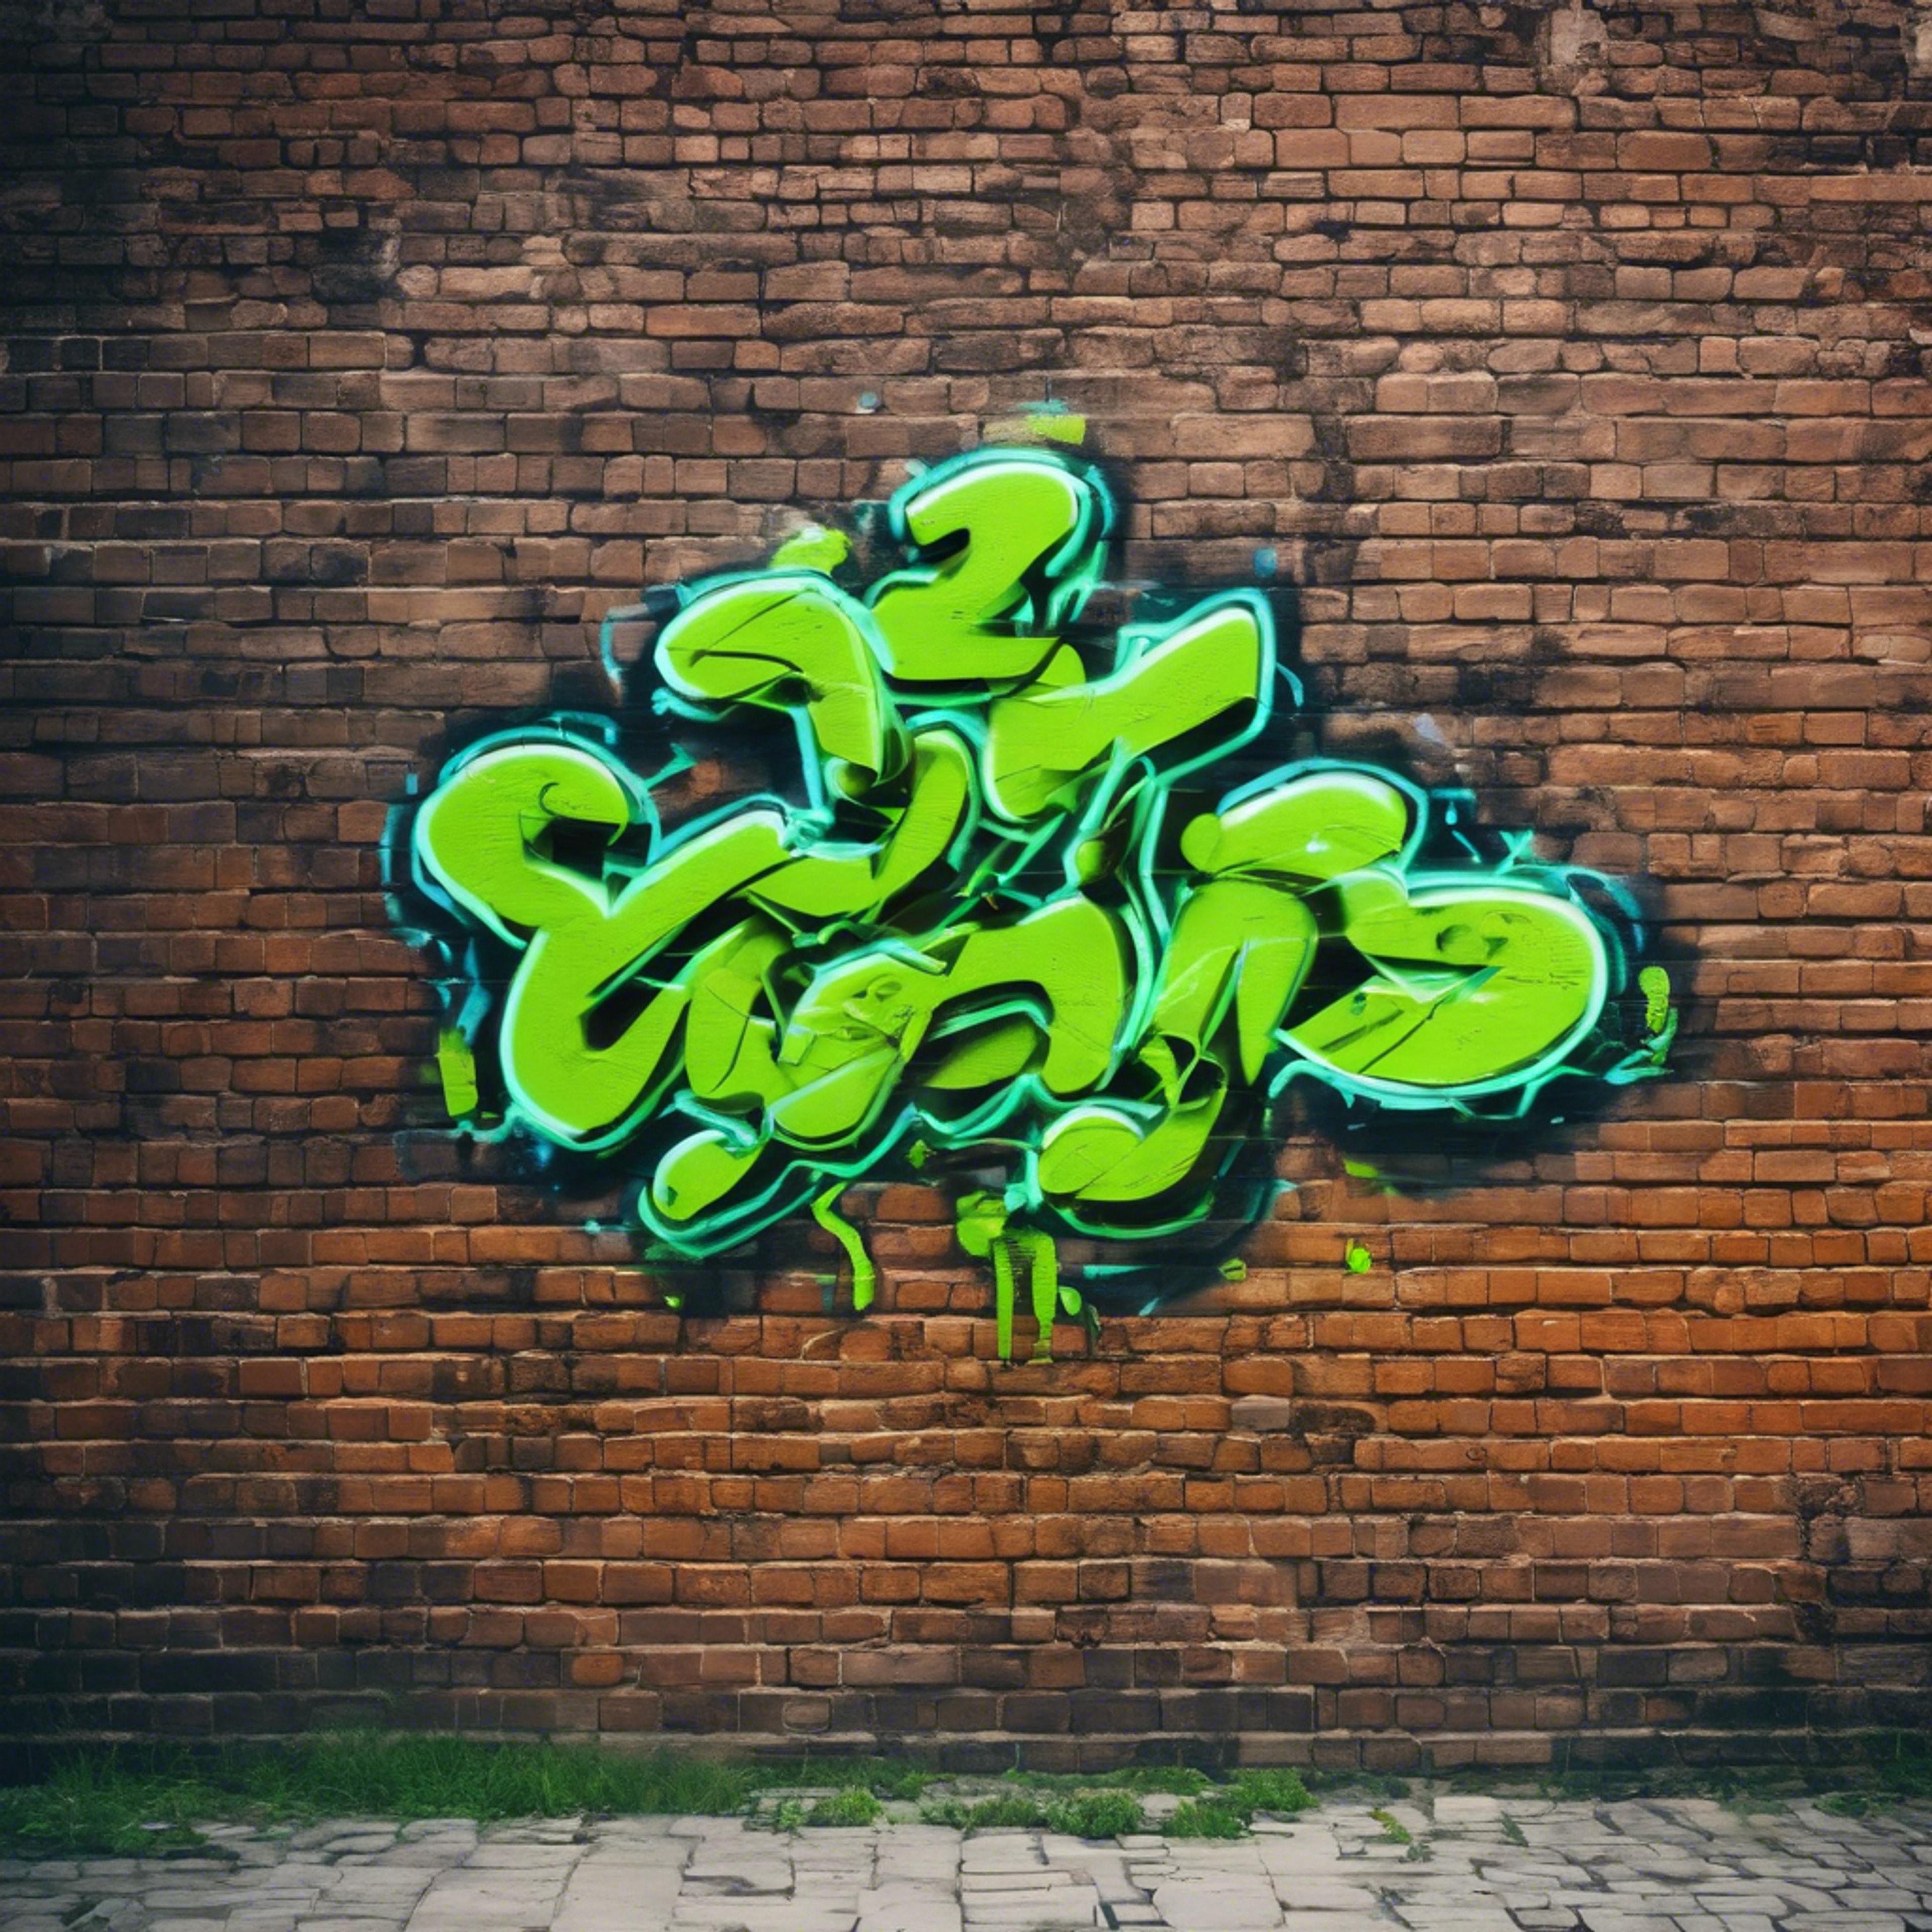 Cool neon green graffiti on an old brick wall in an urban setting.壁紙[8032604dbabf4a1691c6]